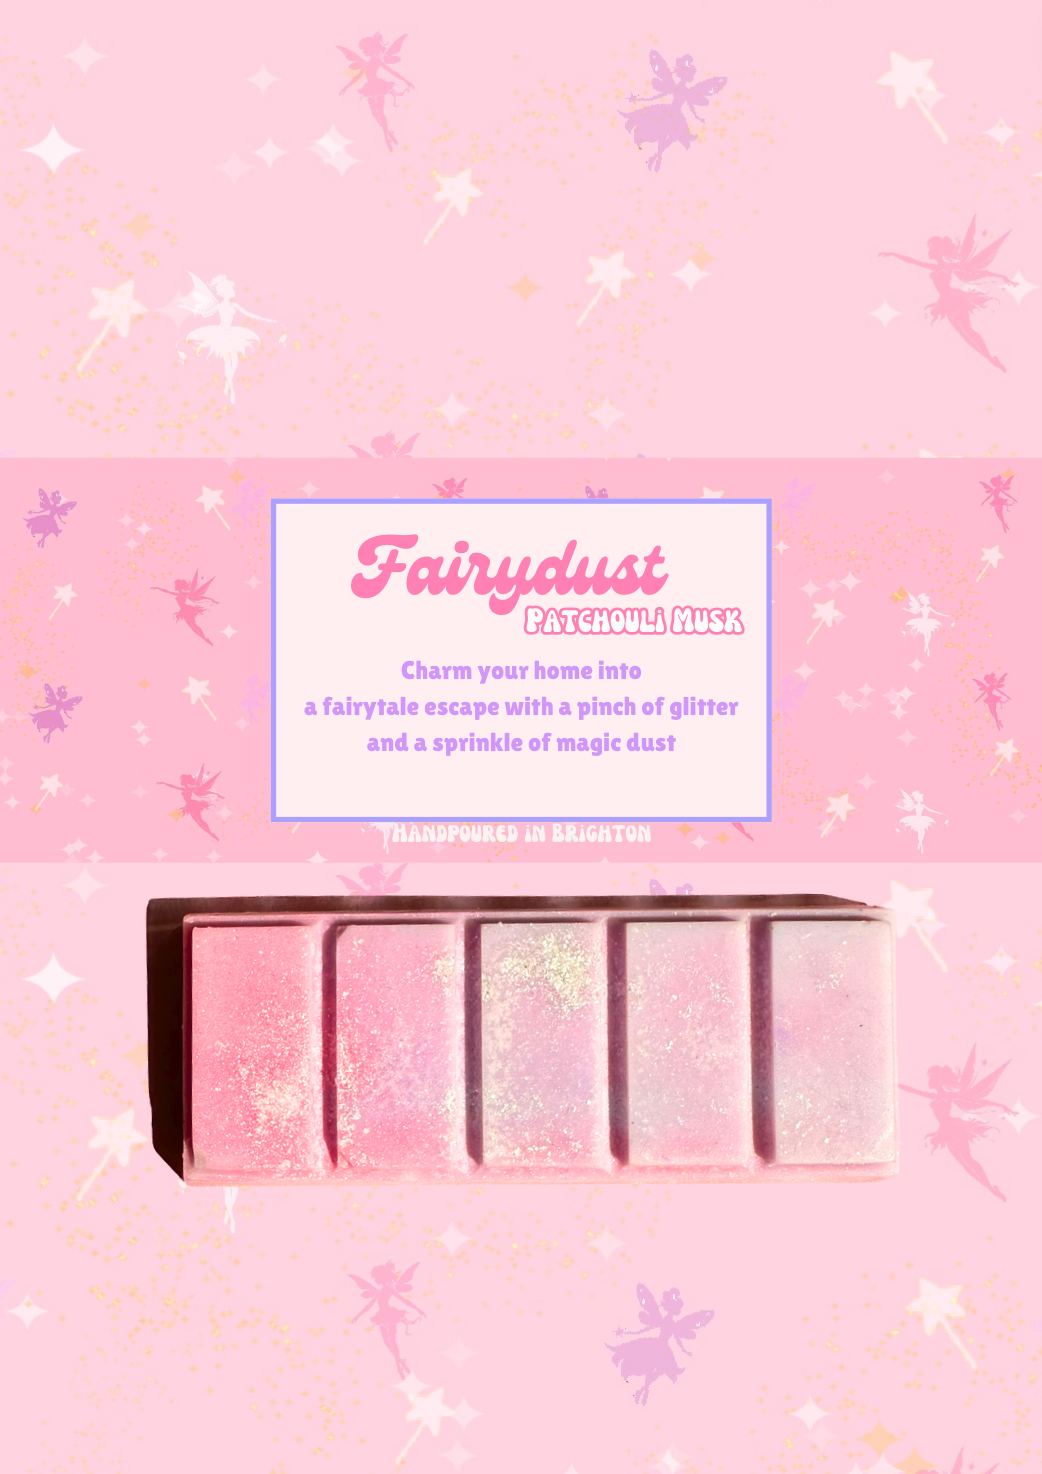 Fairydust- Patchouli Musk fragranced Snap Bar